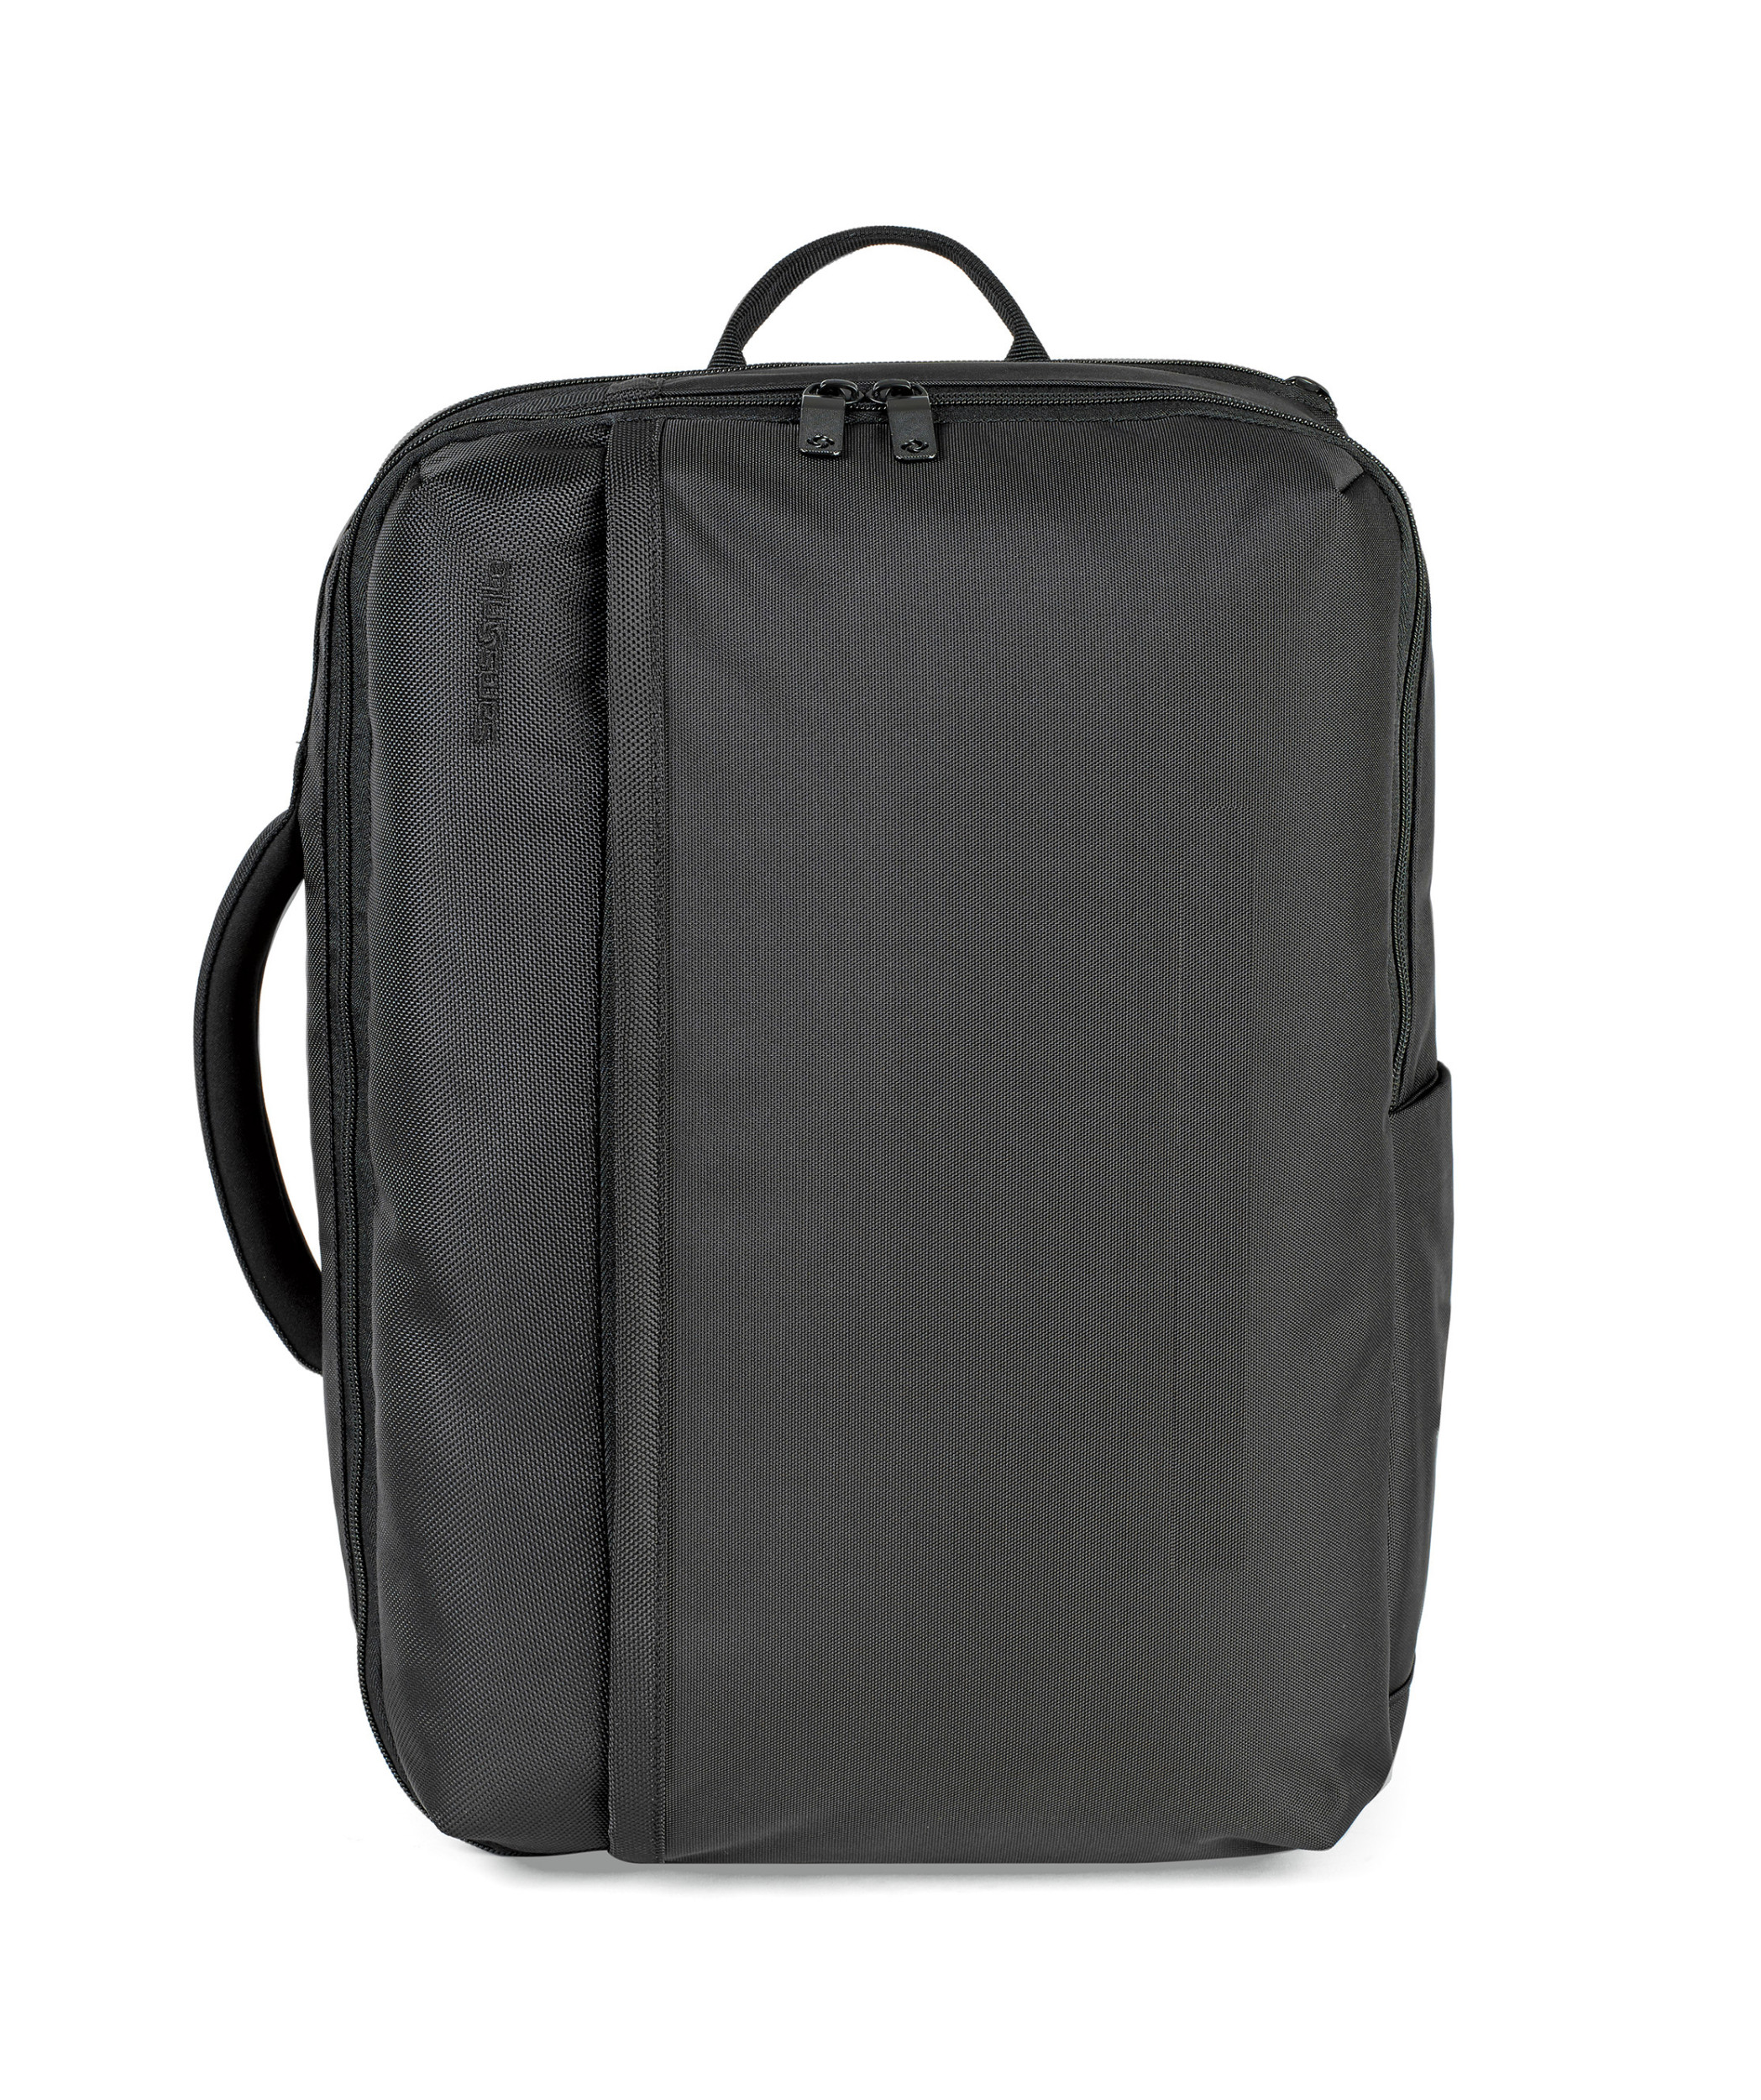 Samsonite 100095-001 - Landry Computer Backpack